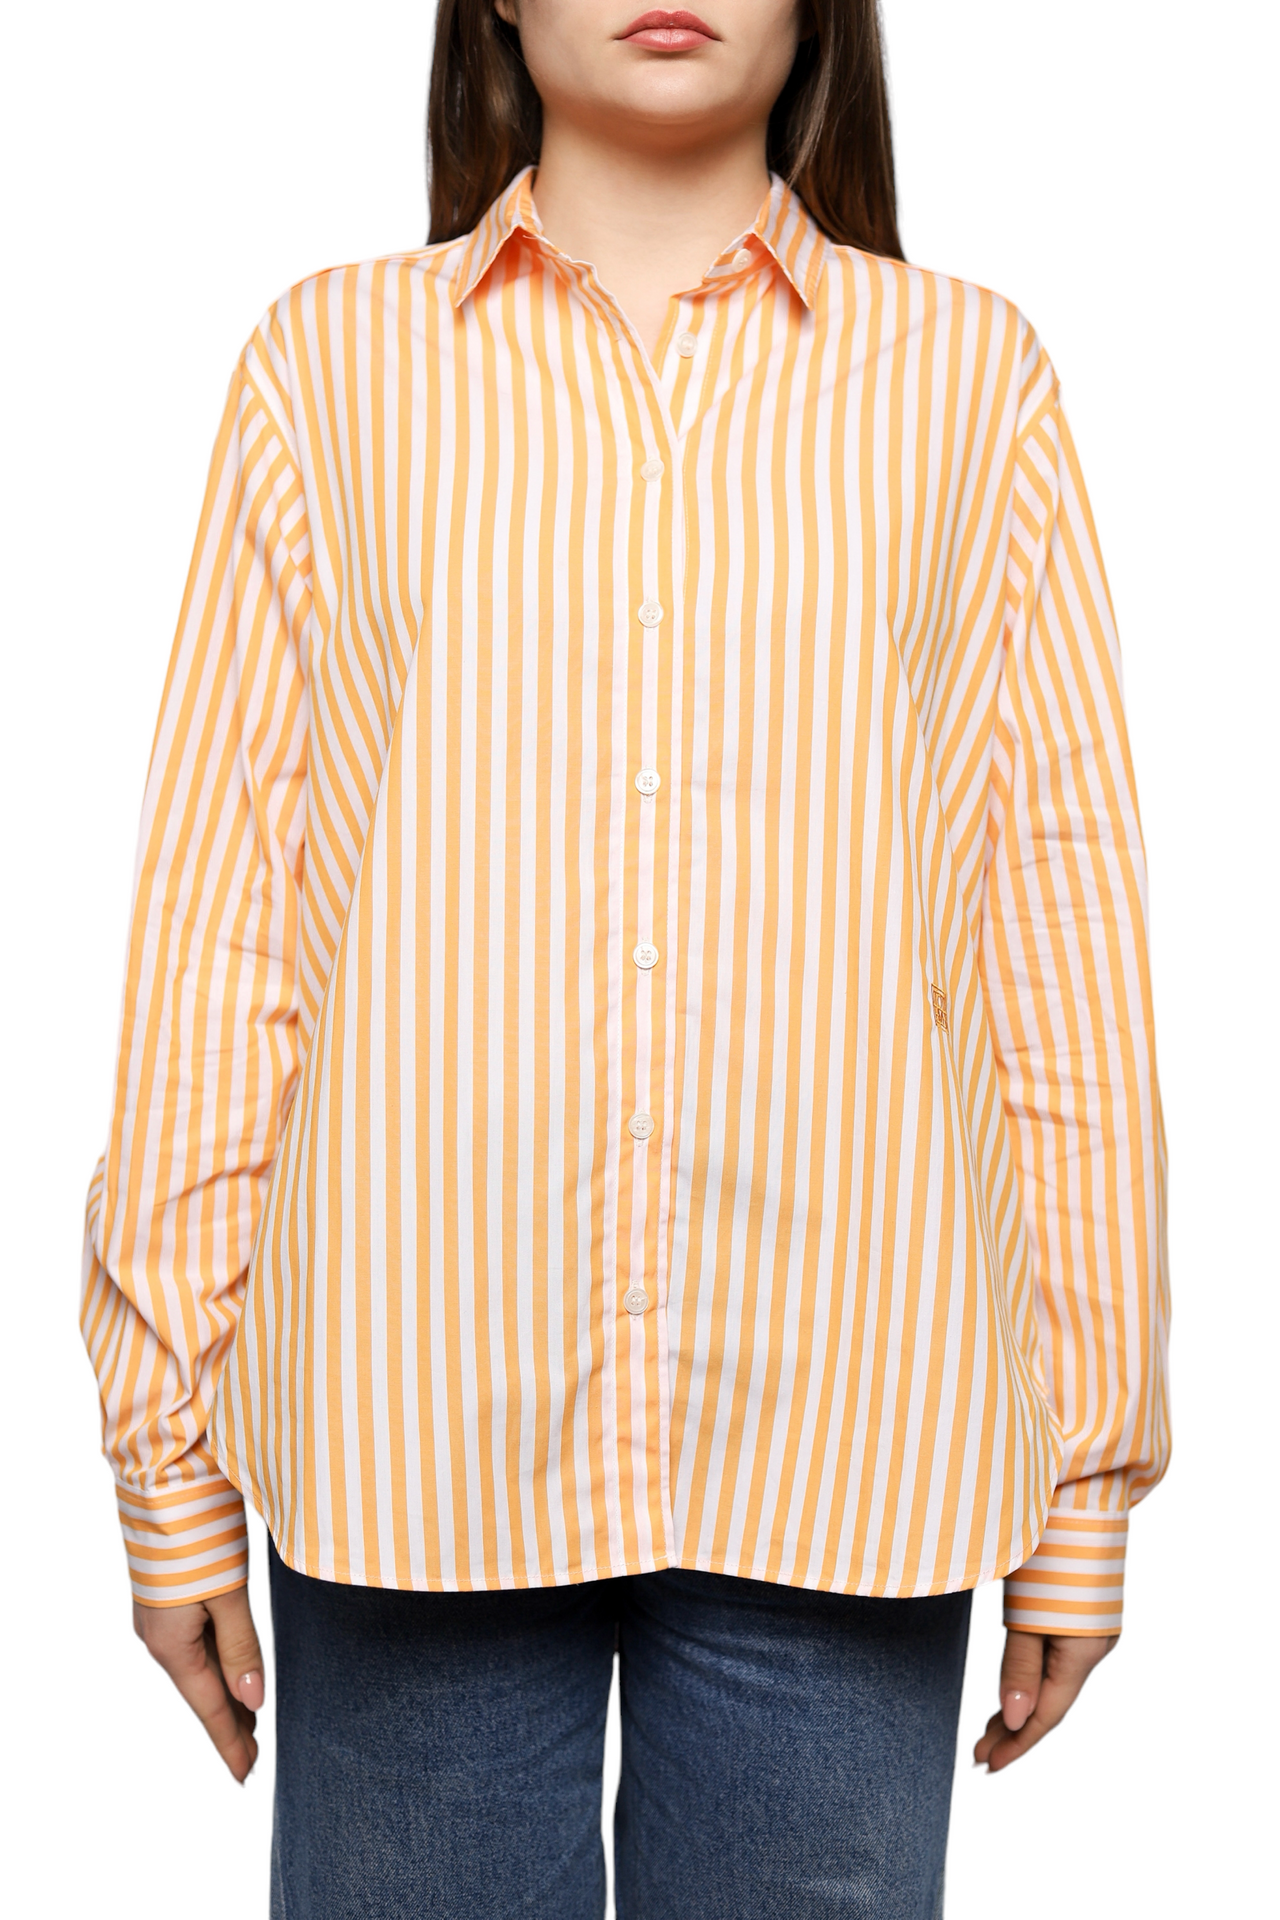 Toteme Signature Cotton Shirt Orange Stripe